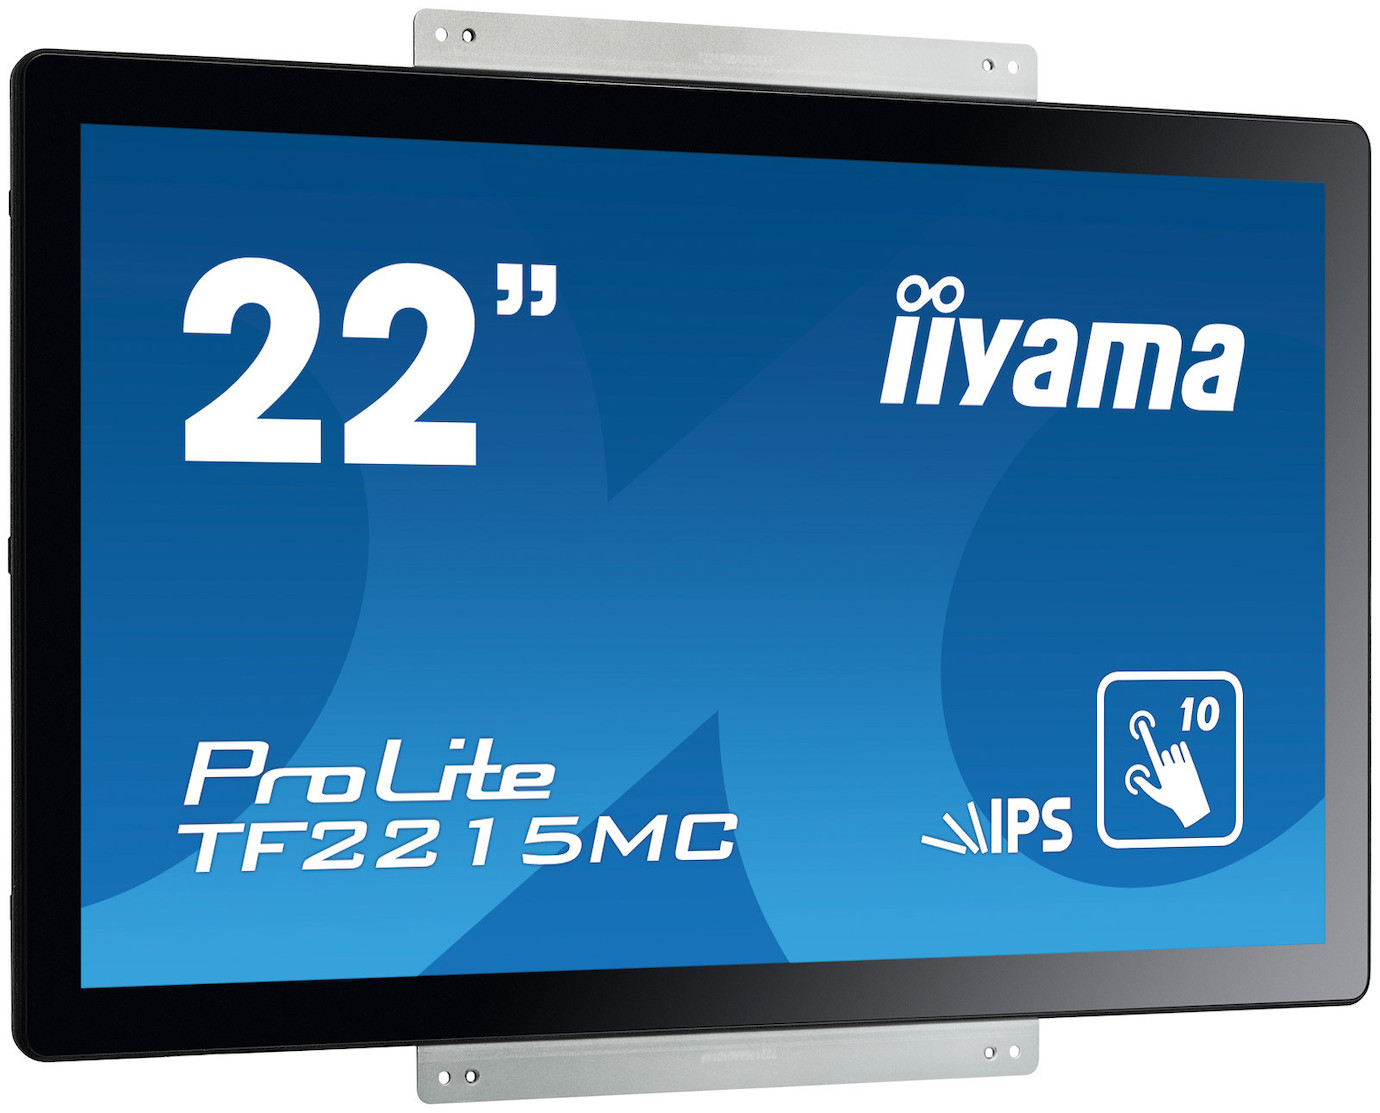 Vorschau: iiyama PROLITE TF2215MC-B2 22" Touchmonitor mit 14ms und Full HD